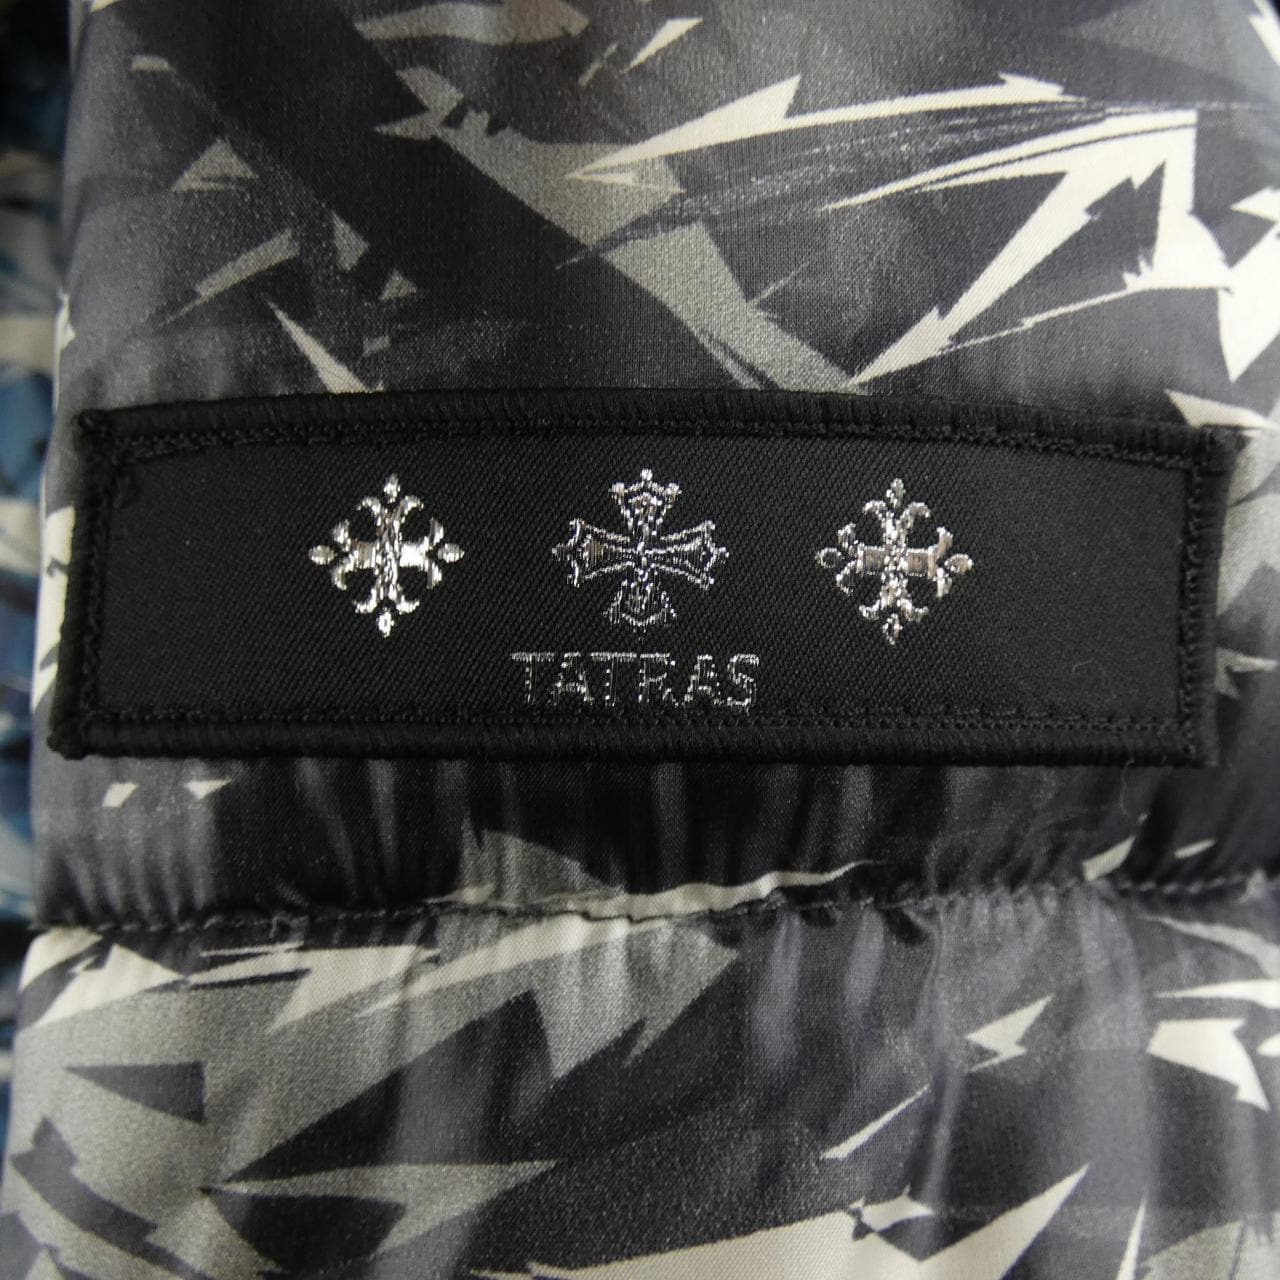 Tatras TATRAS down coat